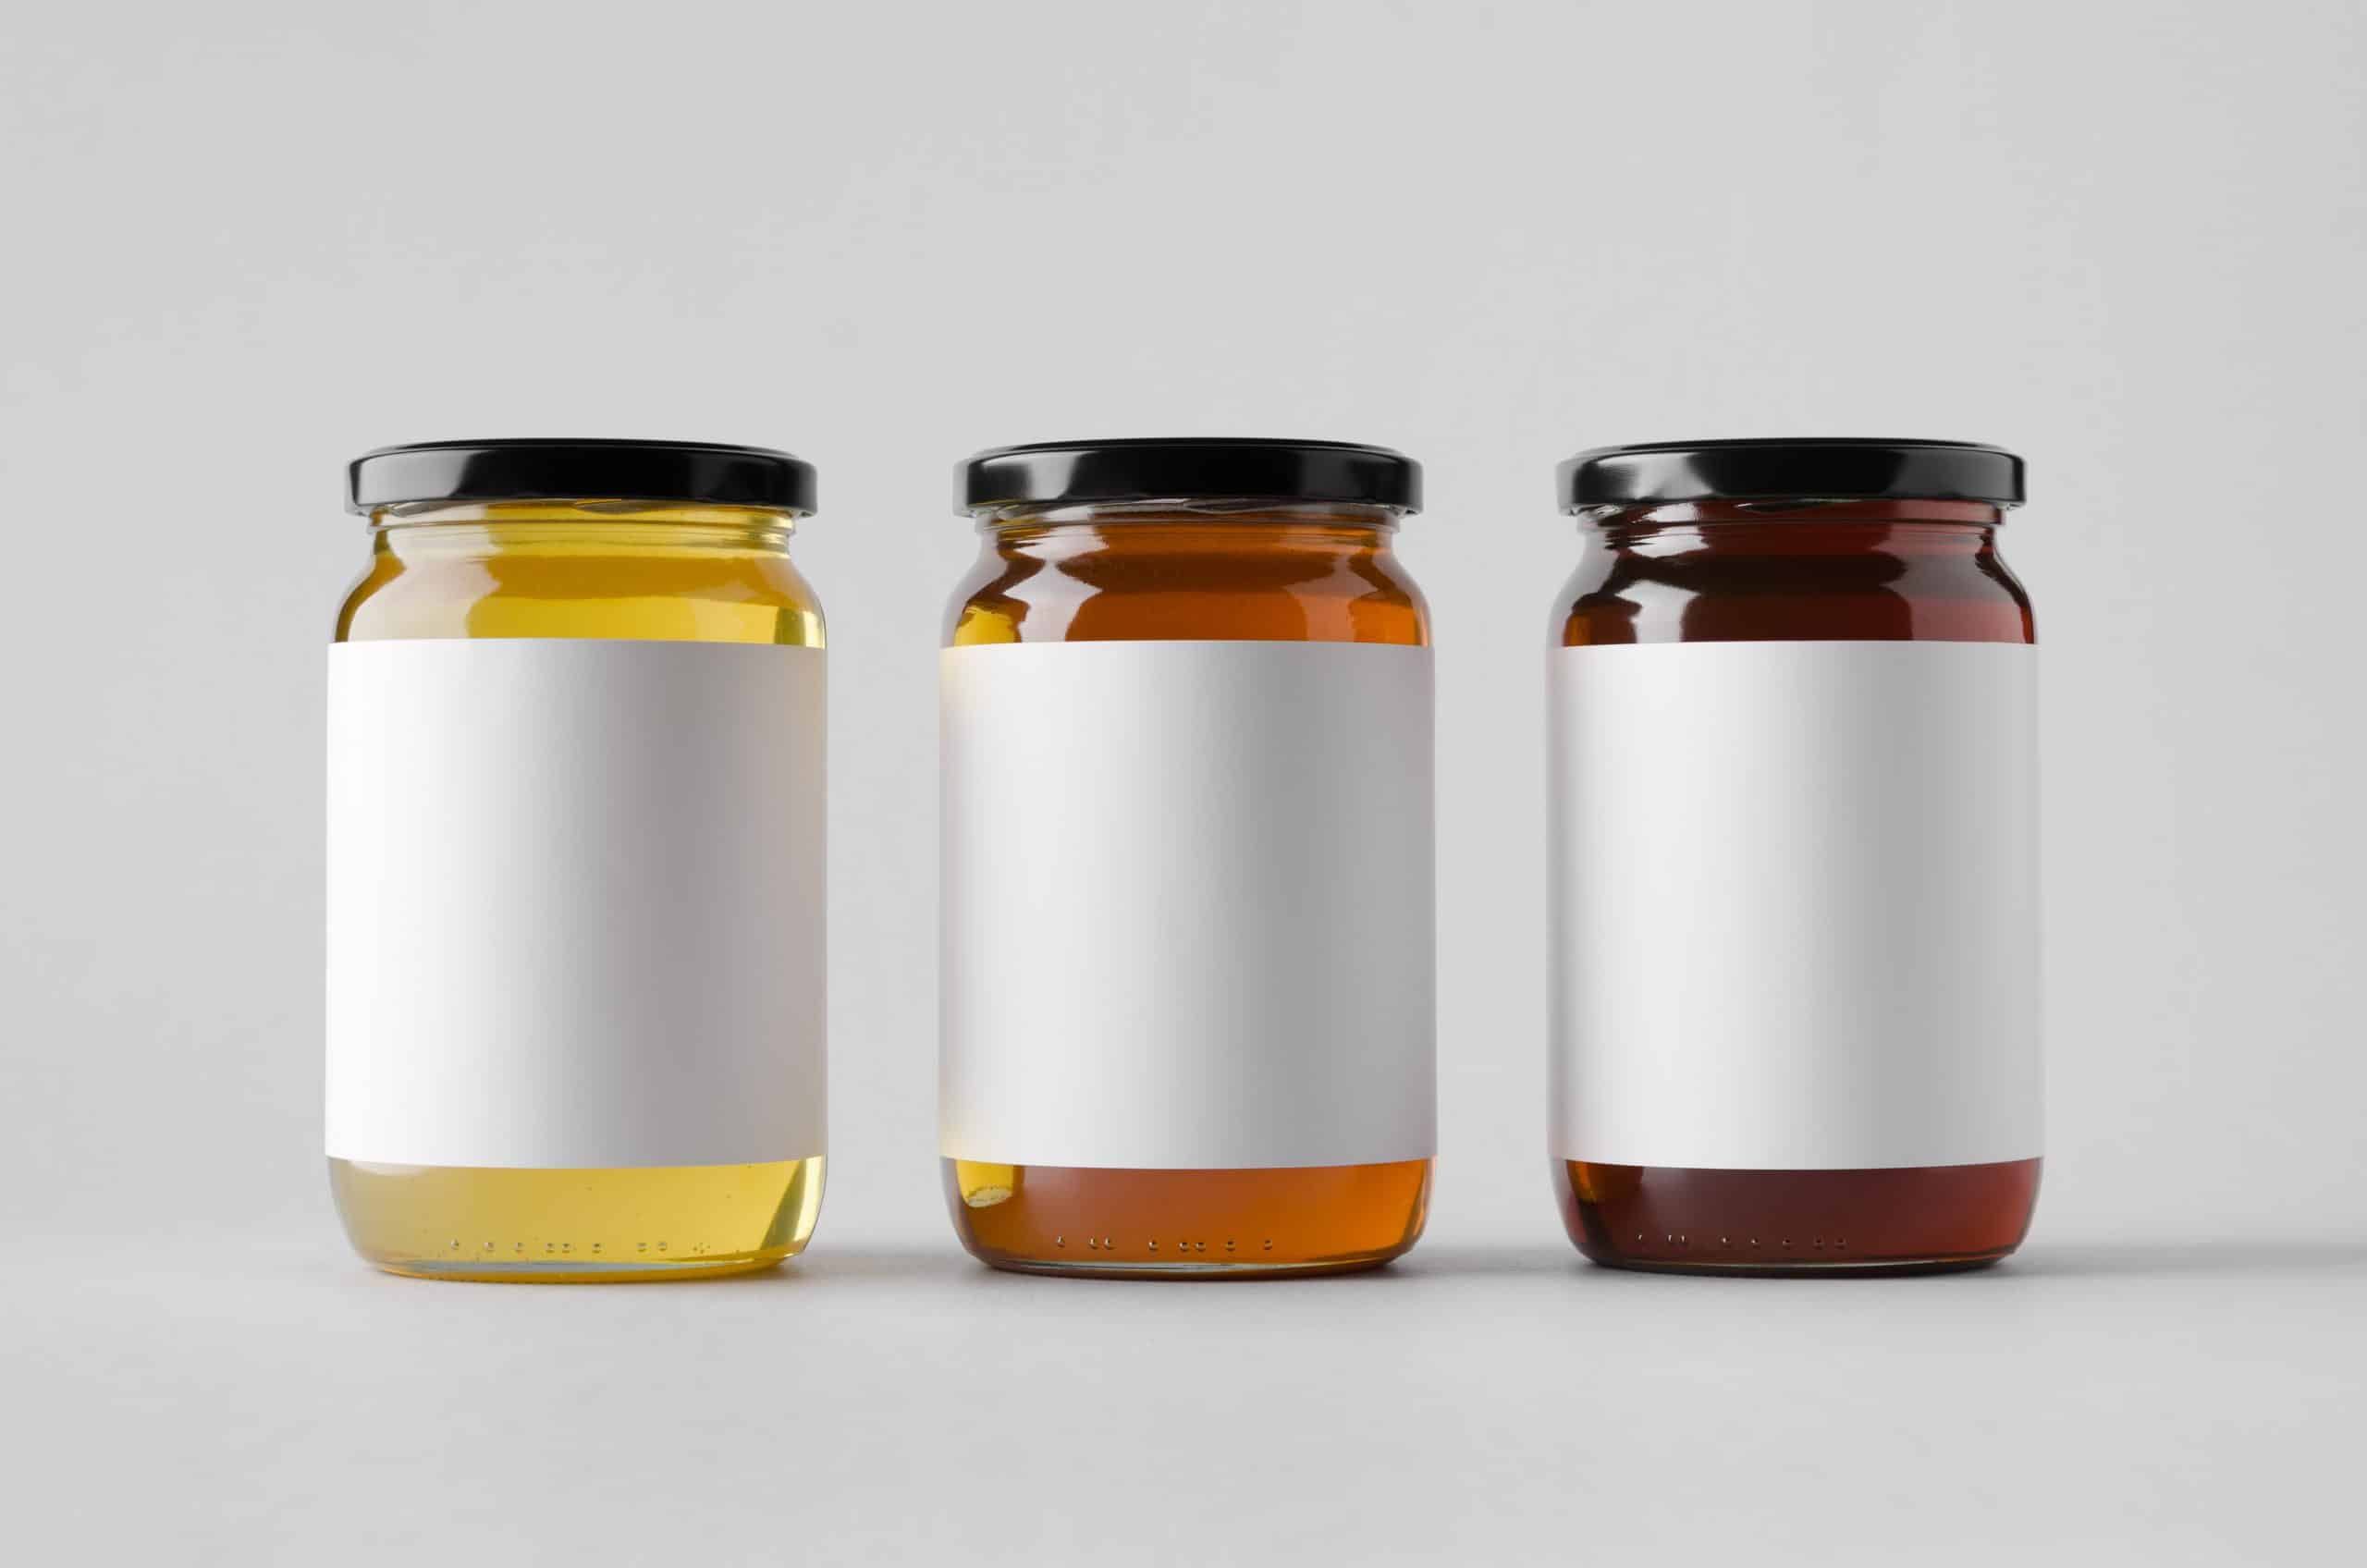 3 quart jars filled with different liquids